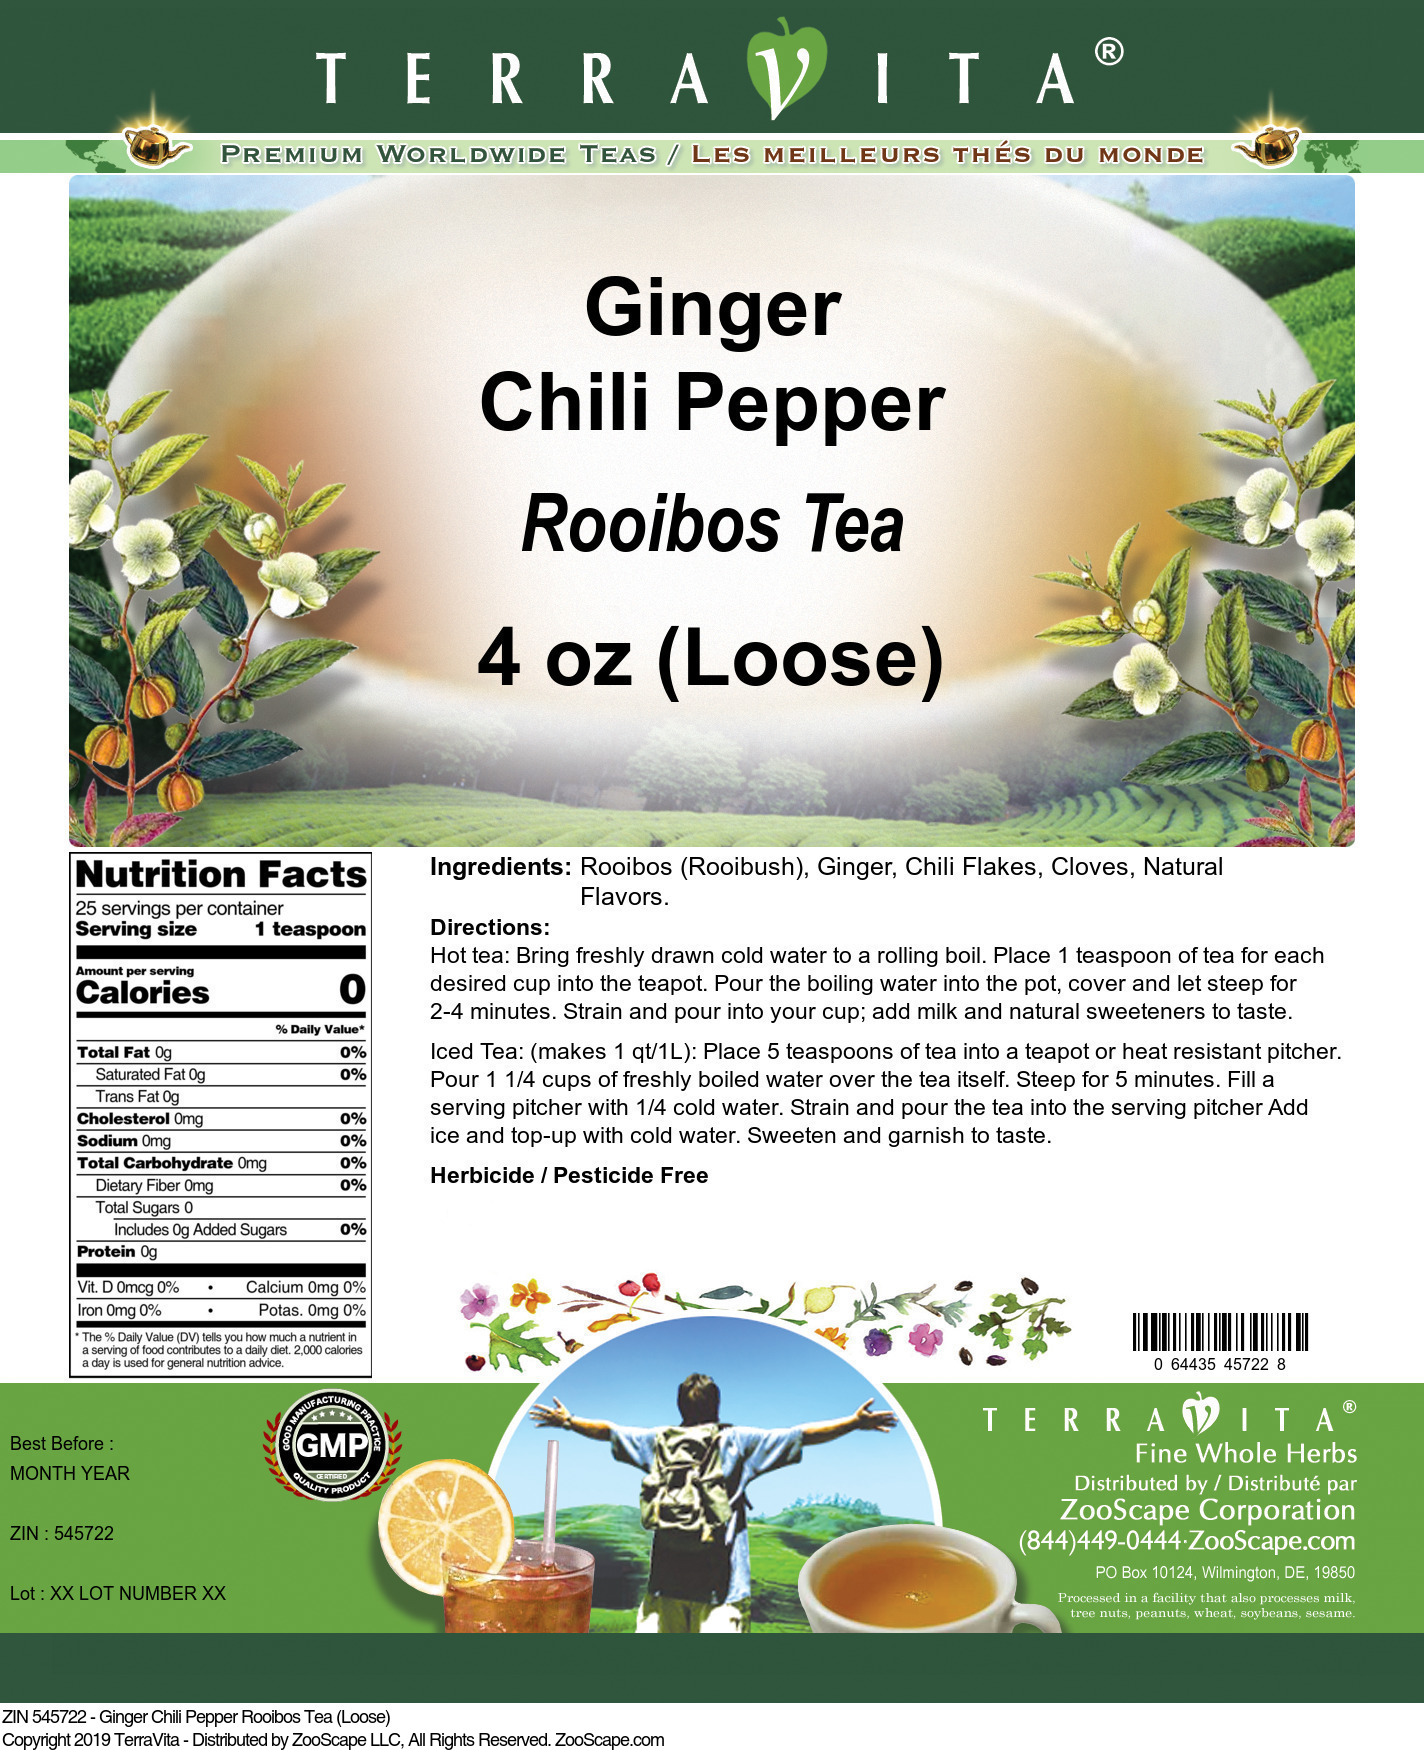 Ginger Chili Pepper Rooibos Tea (Loose) - Label